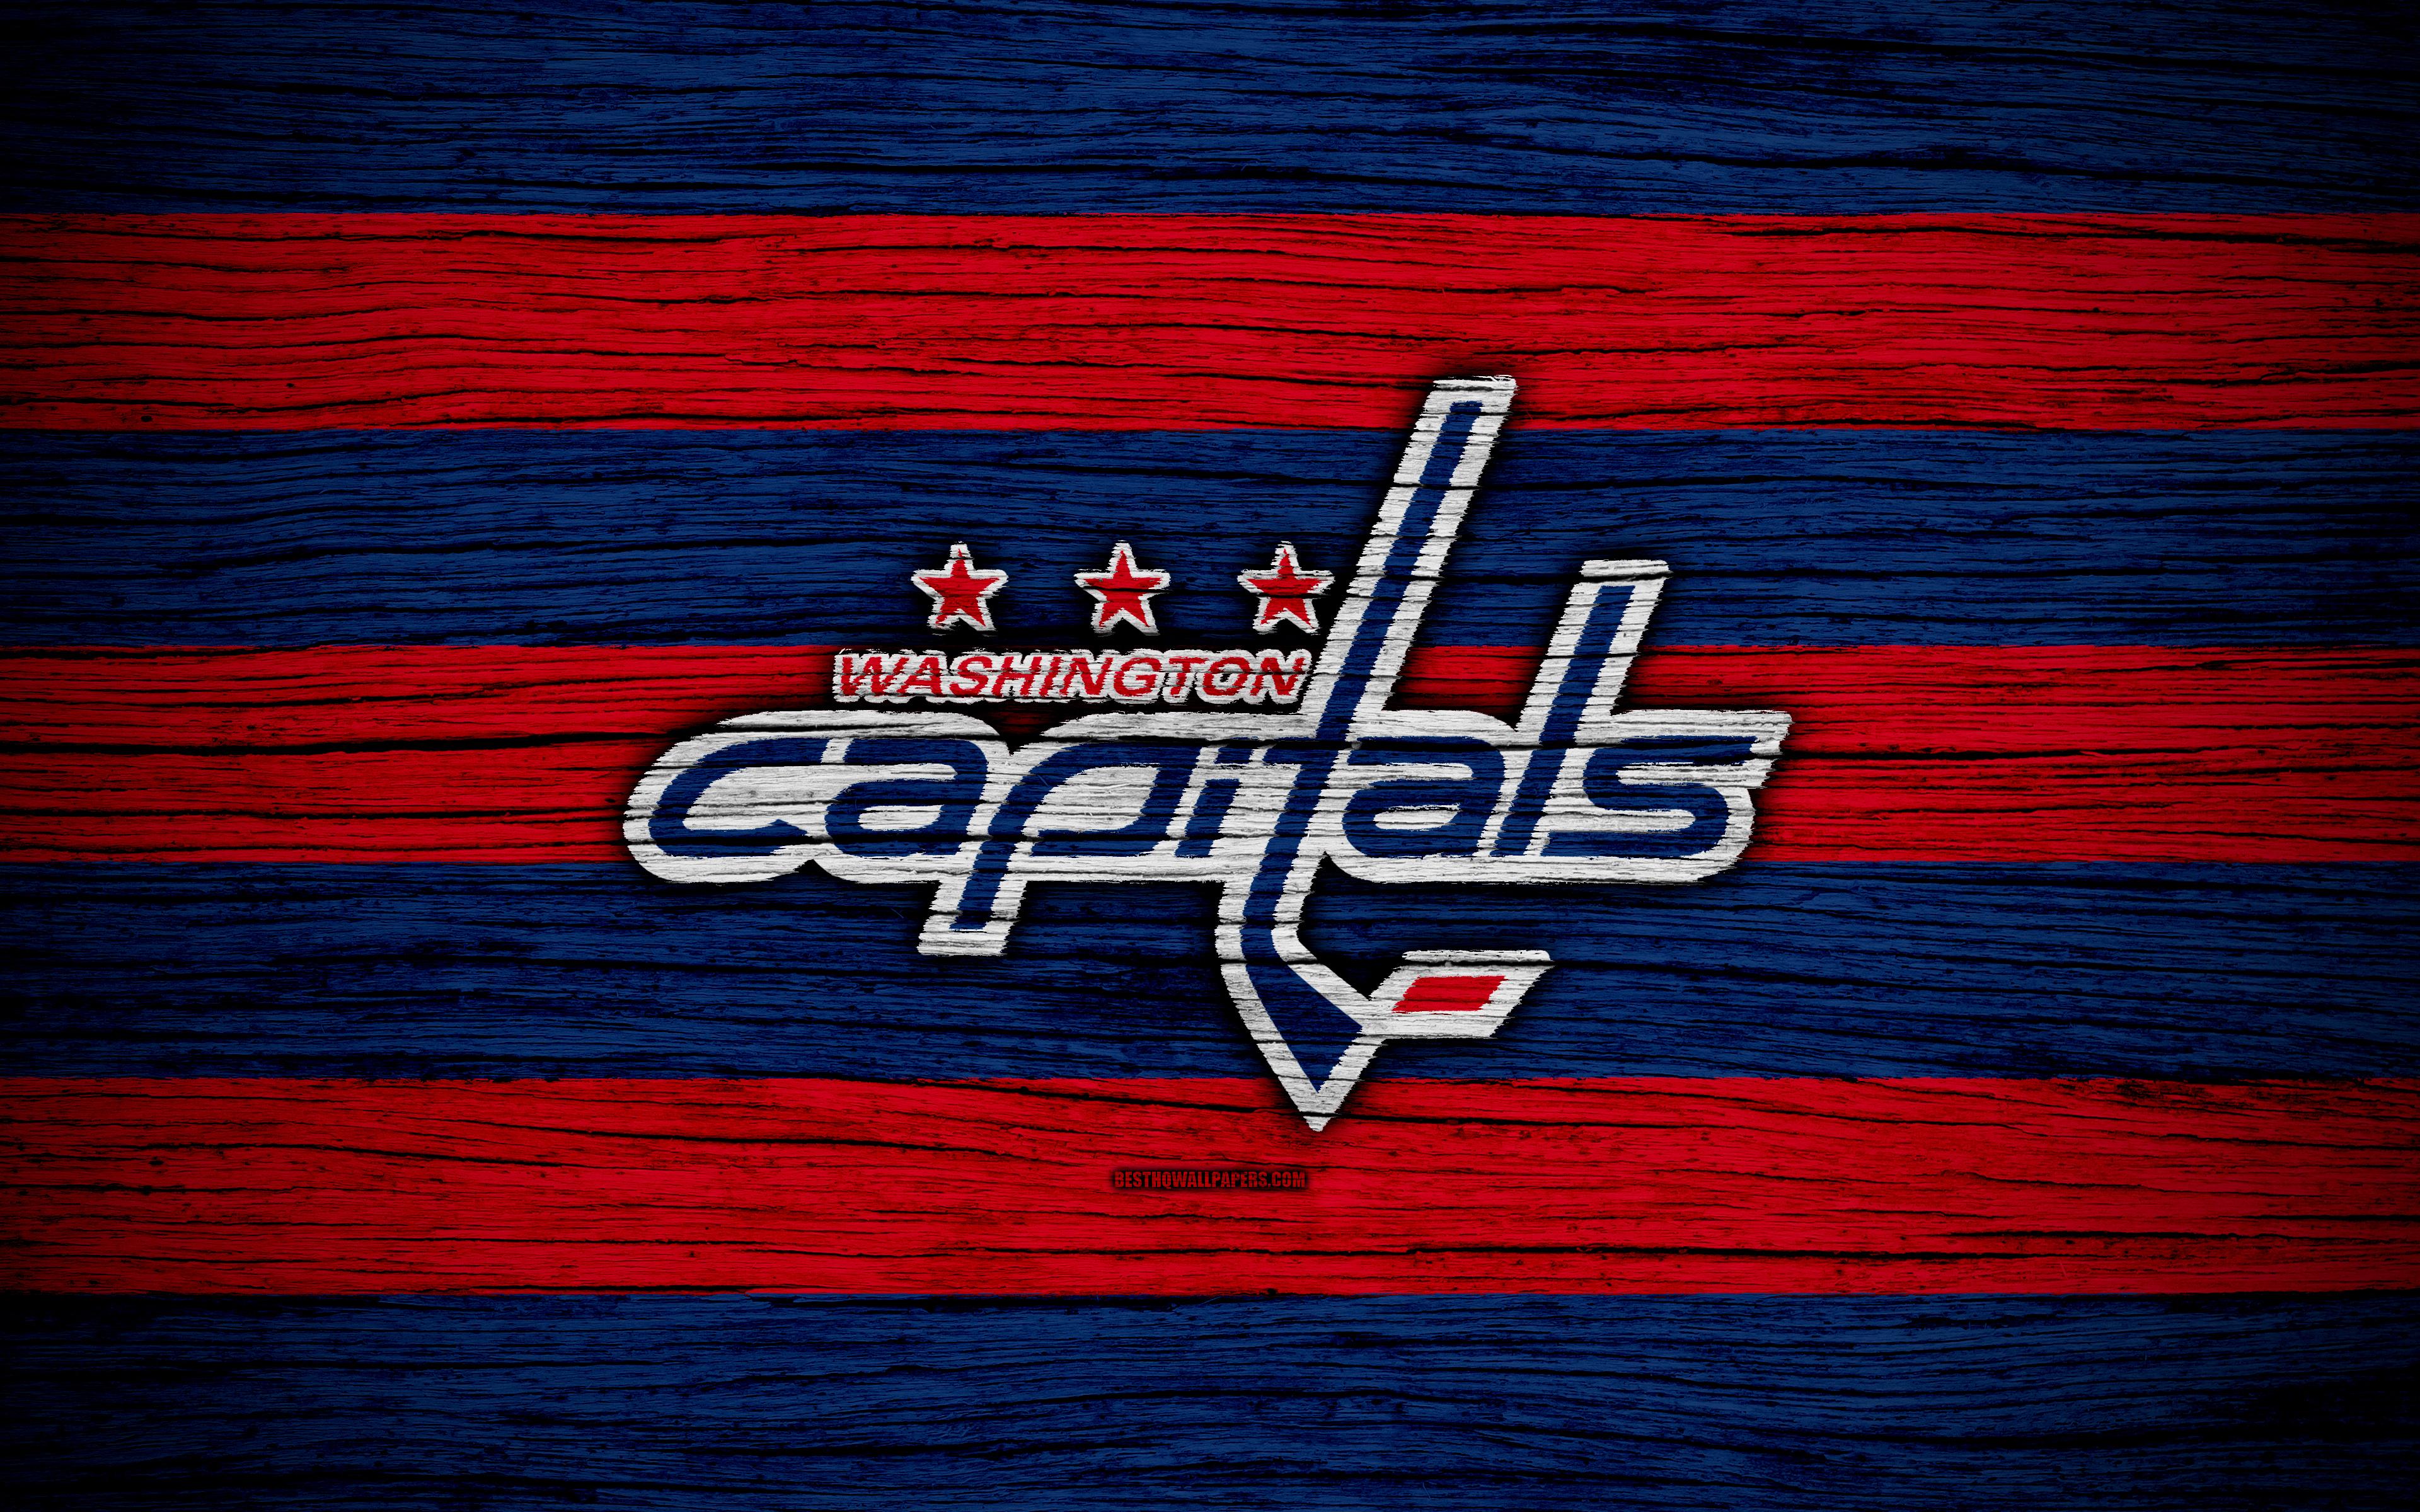 Download wallpaper Washington Capitals, 4k, NHL, hockey club